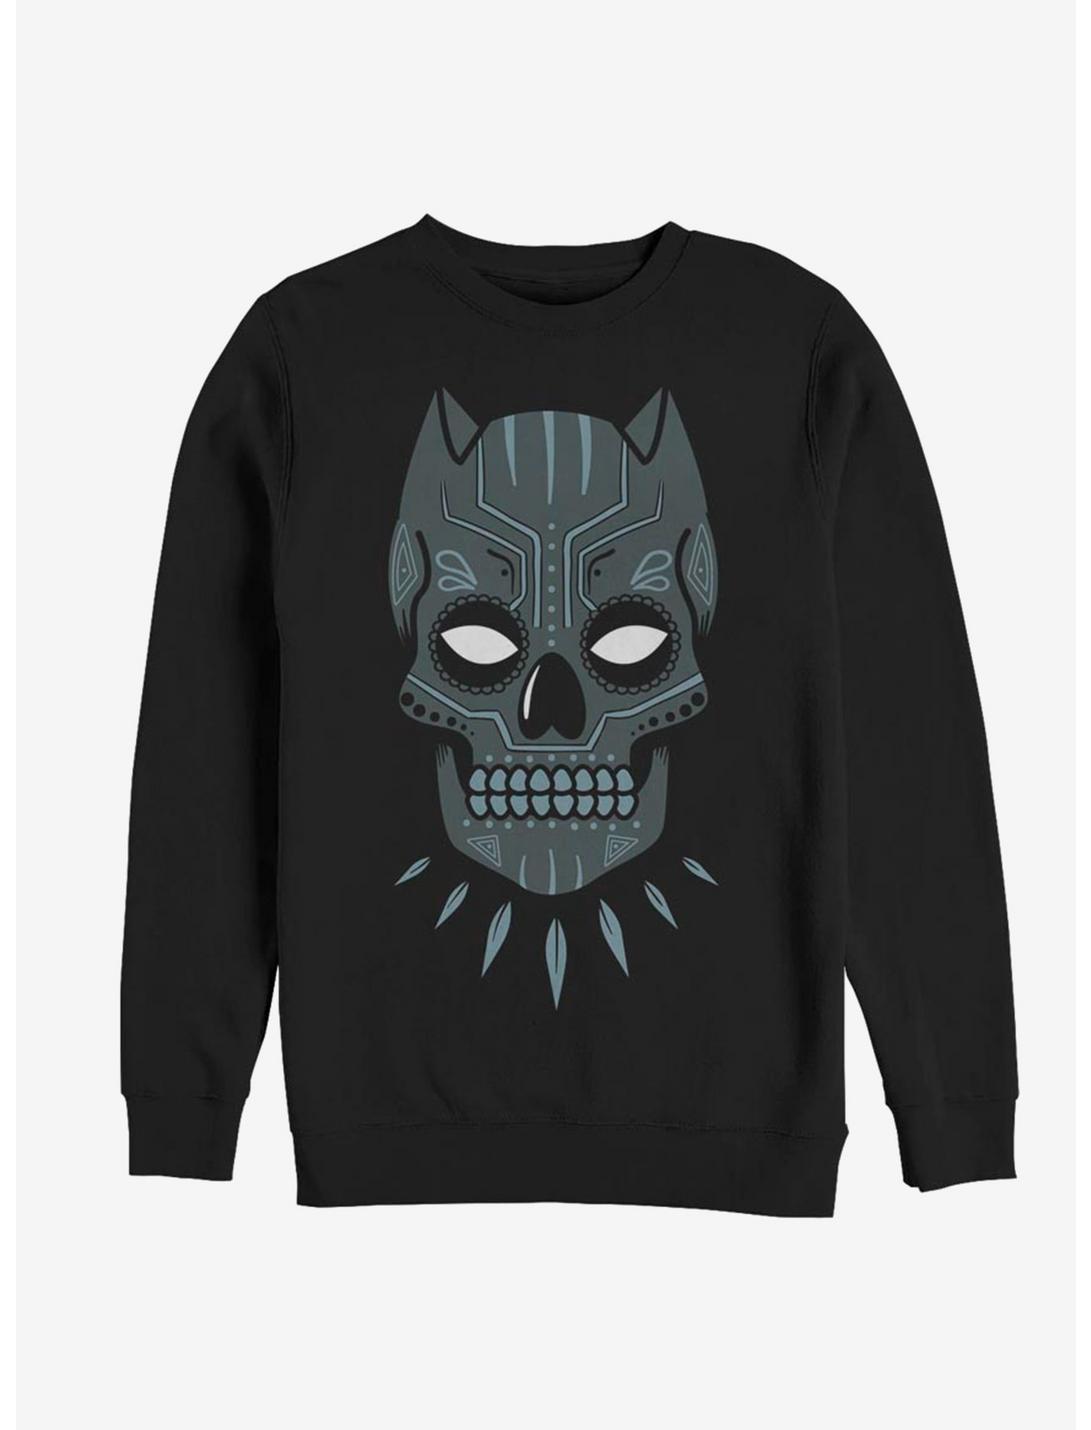 Marvel Black Panther Sugar Skull Sweatshirt, BLACK, hi-res